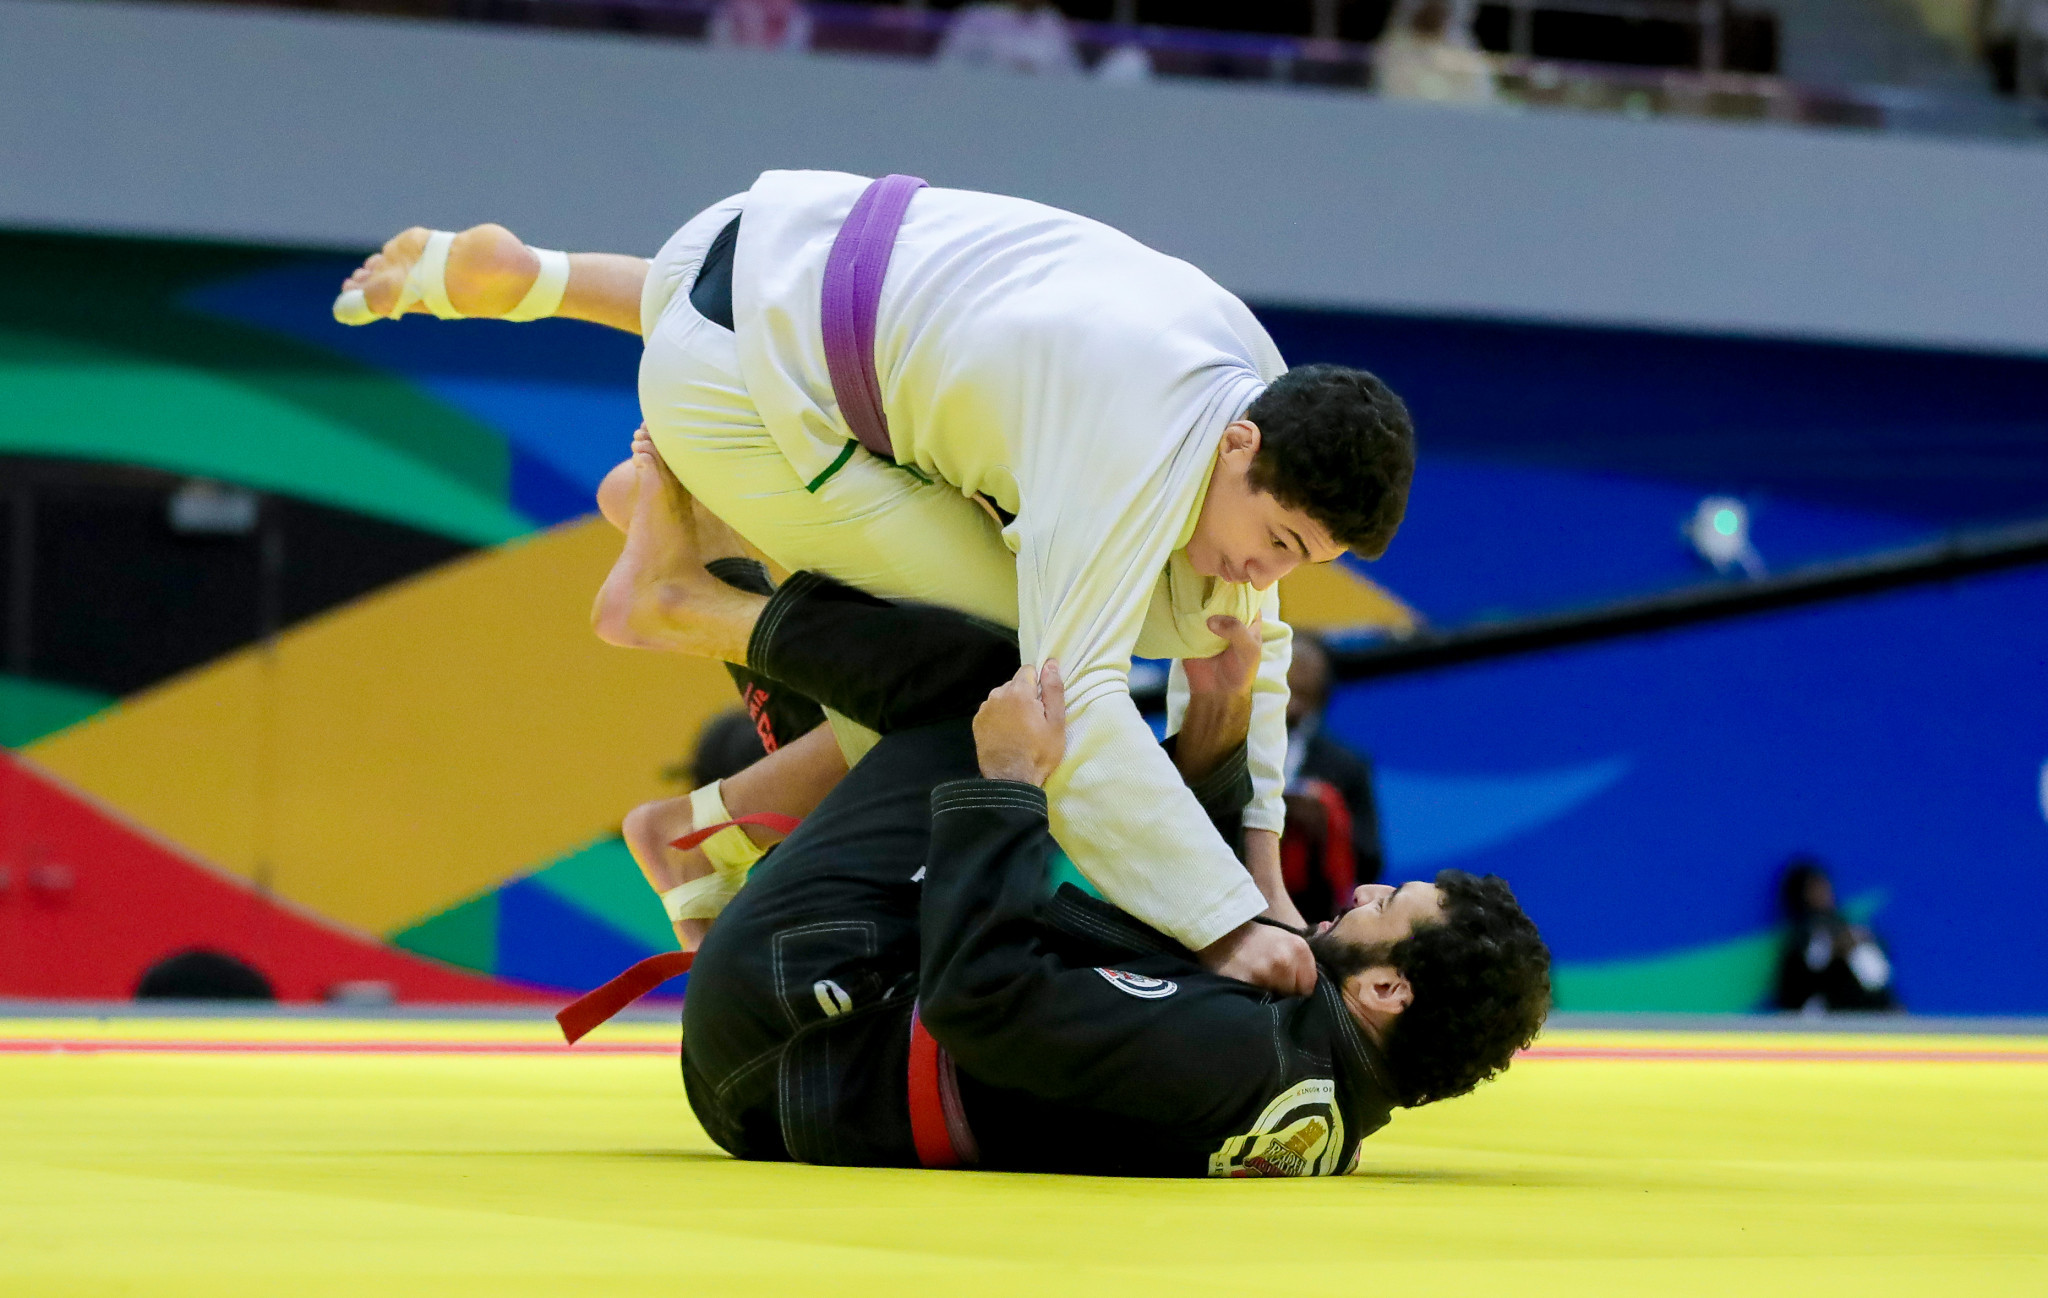 The Ju-Jitsu champions awarded in Saudi Games 2023